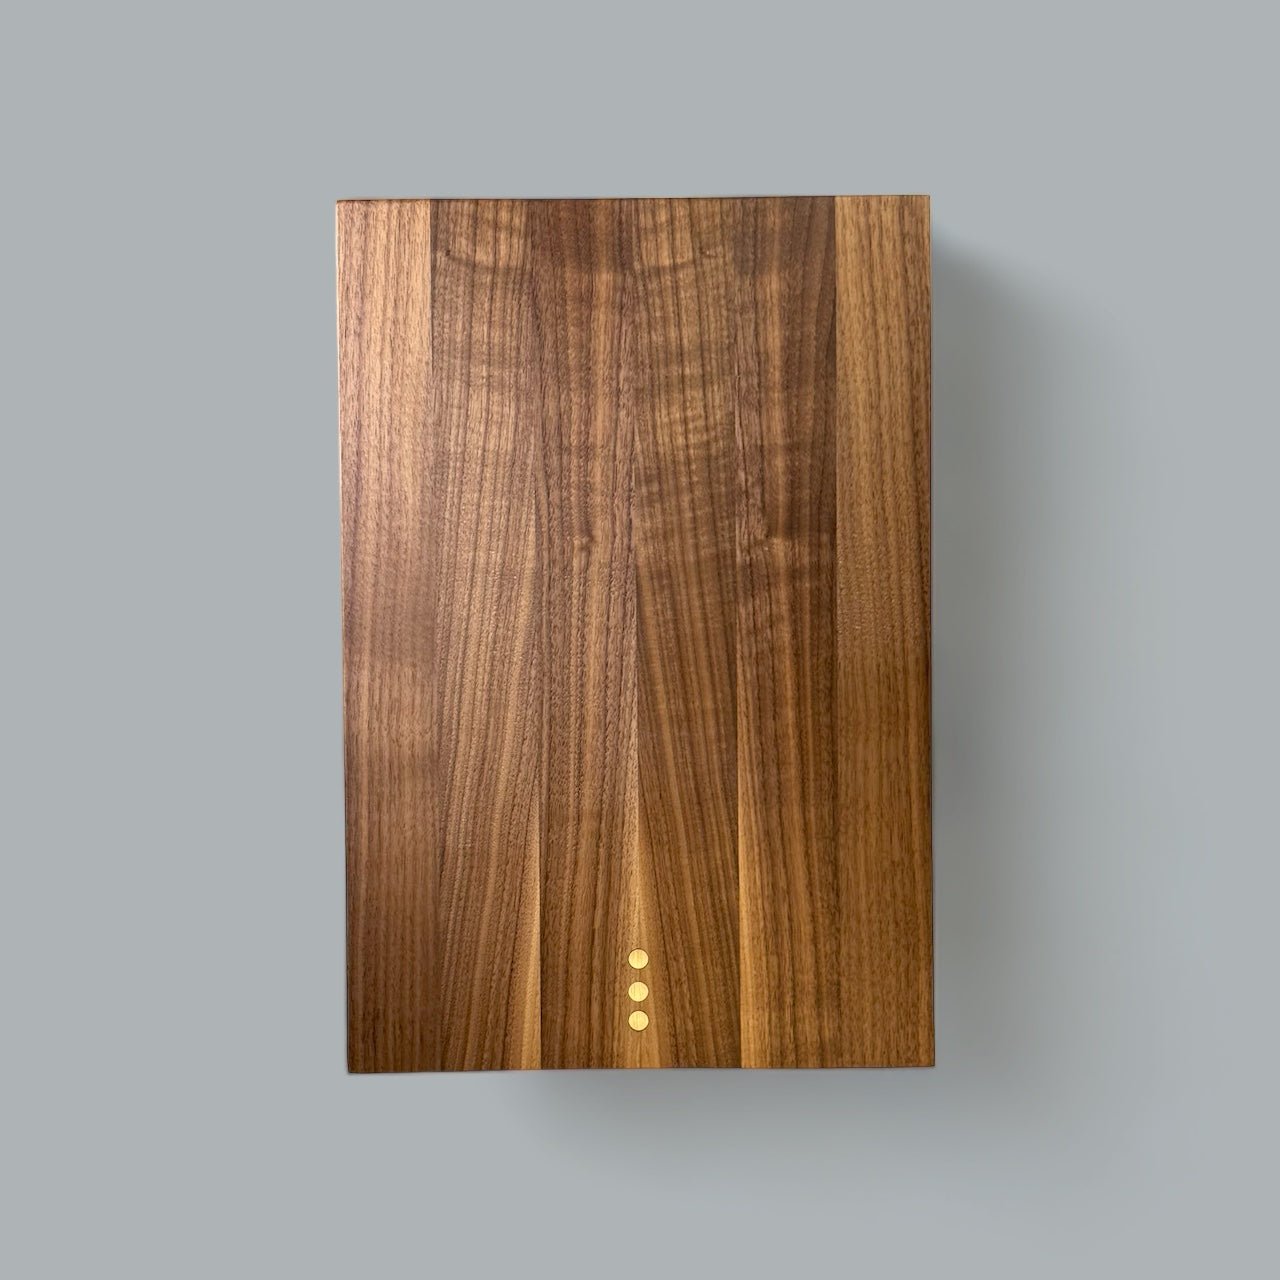 Rune-Jakobsen Woodworks 'Zidetable' sidebord_9 by Rune-Jakobsen Design